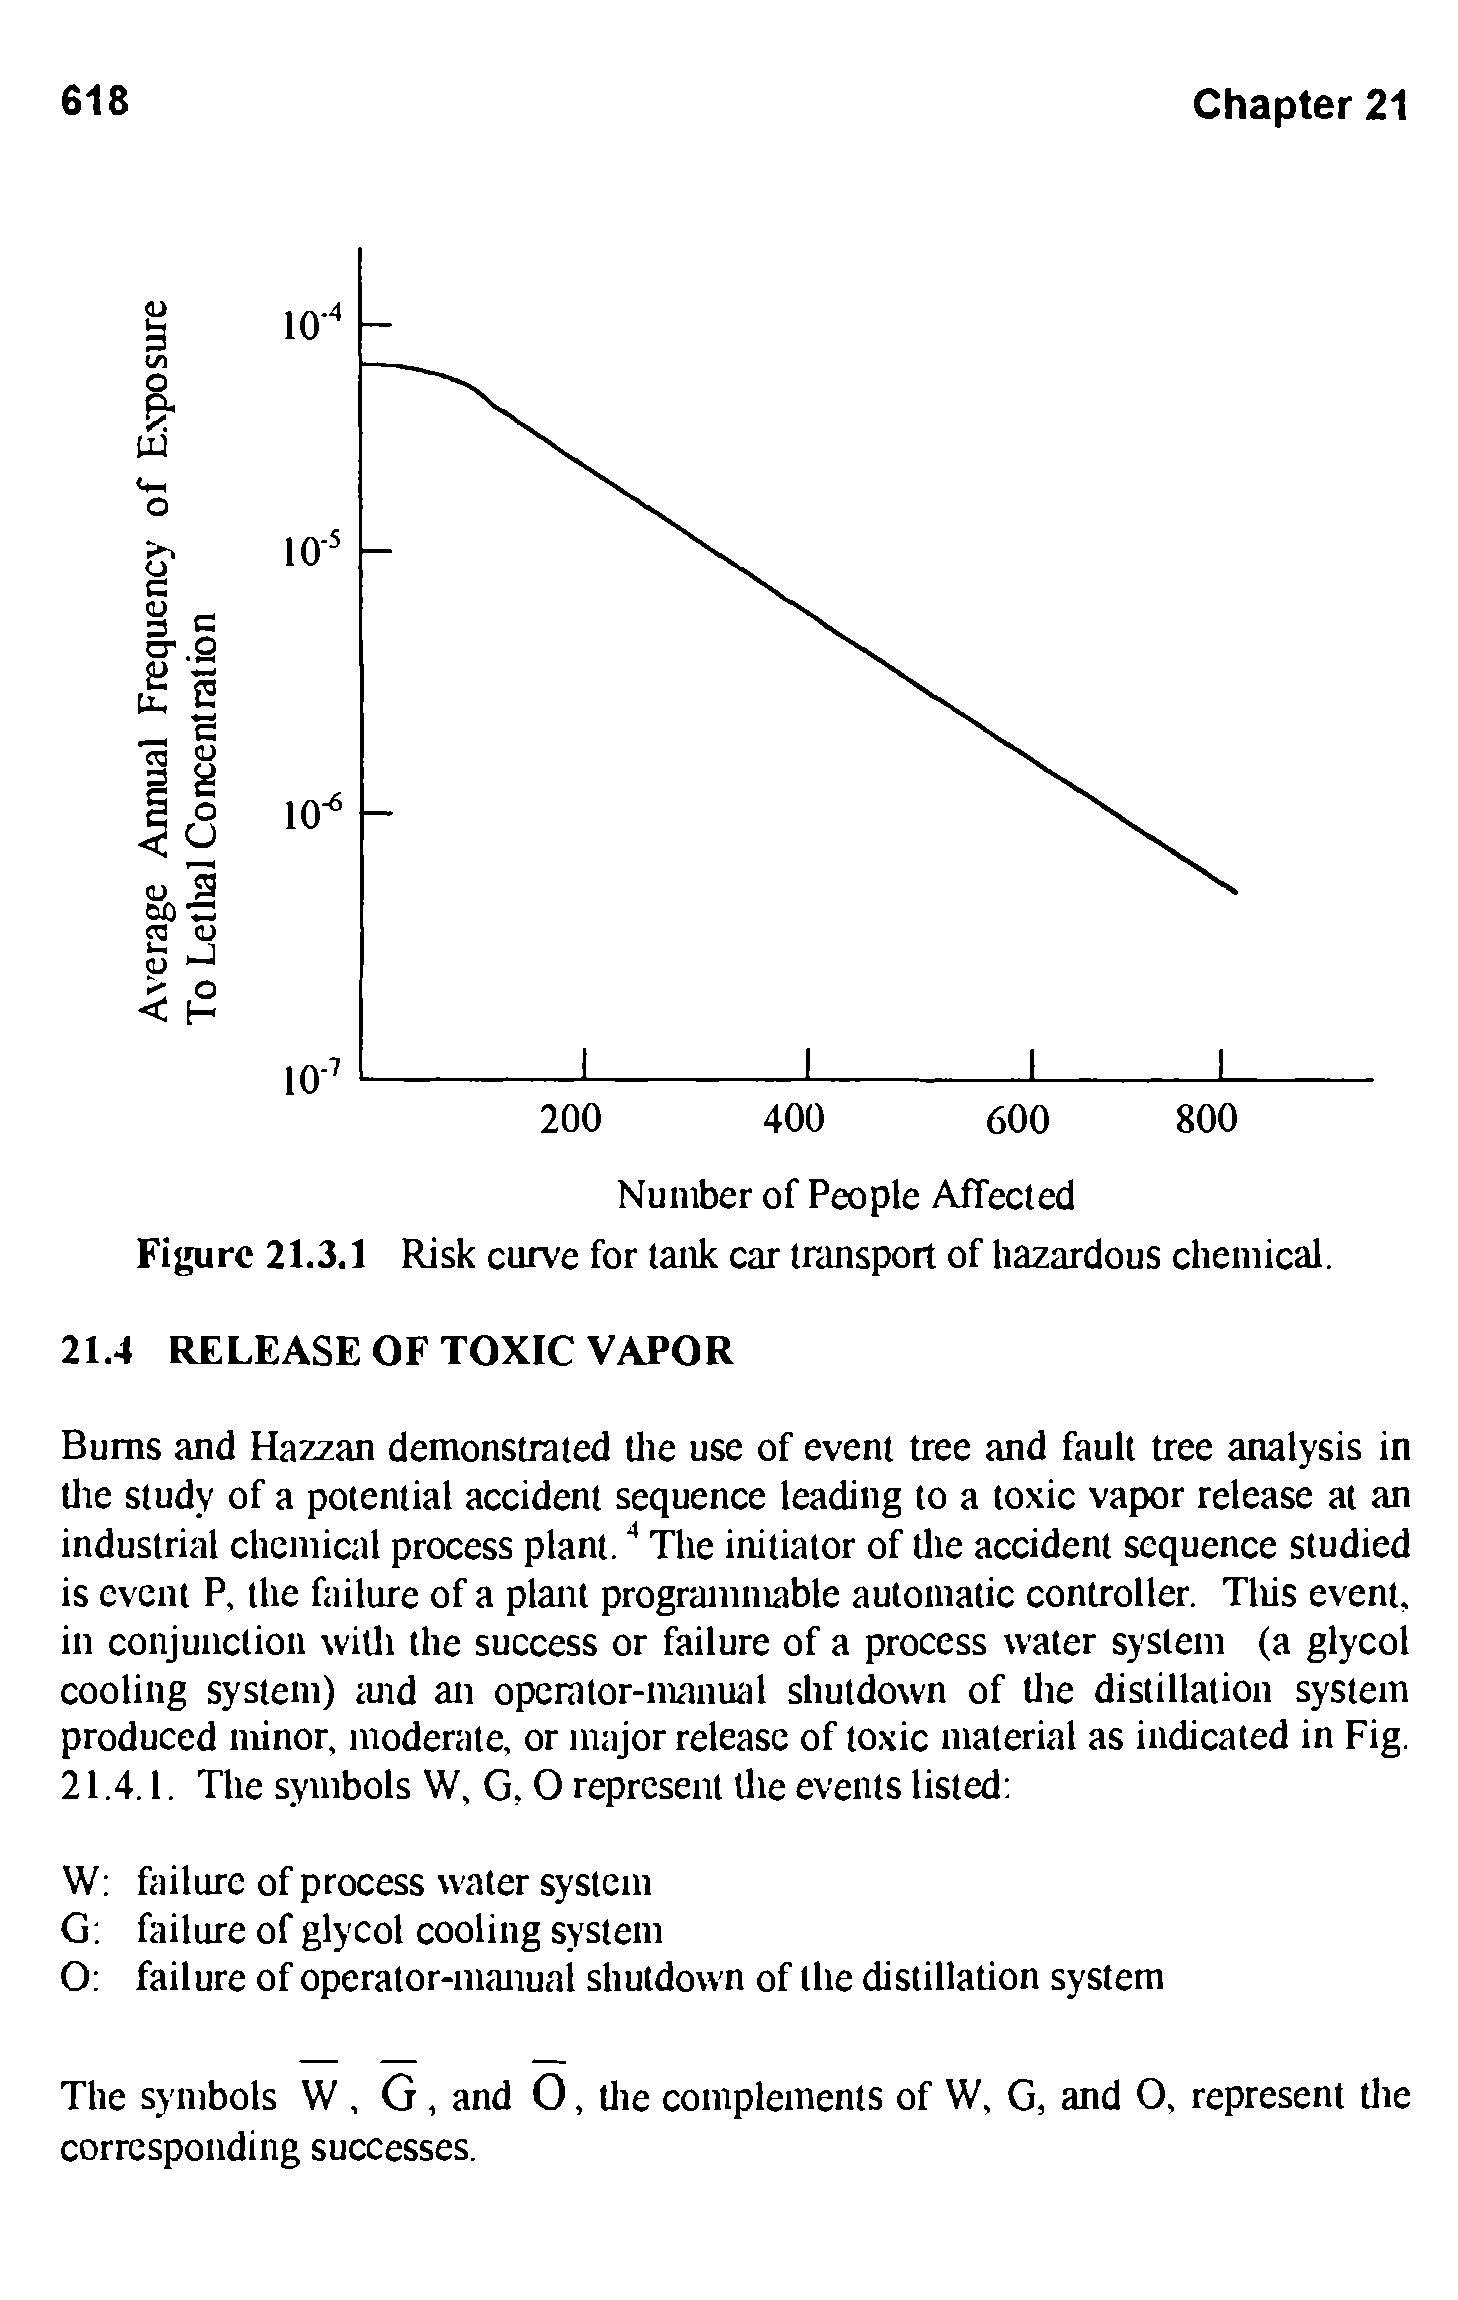 Figure 21.3.1 Risk curve for tank car transport of hazardous chemical.